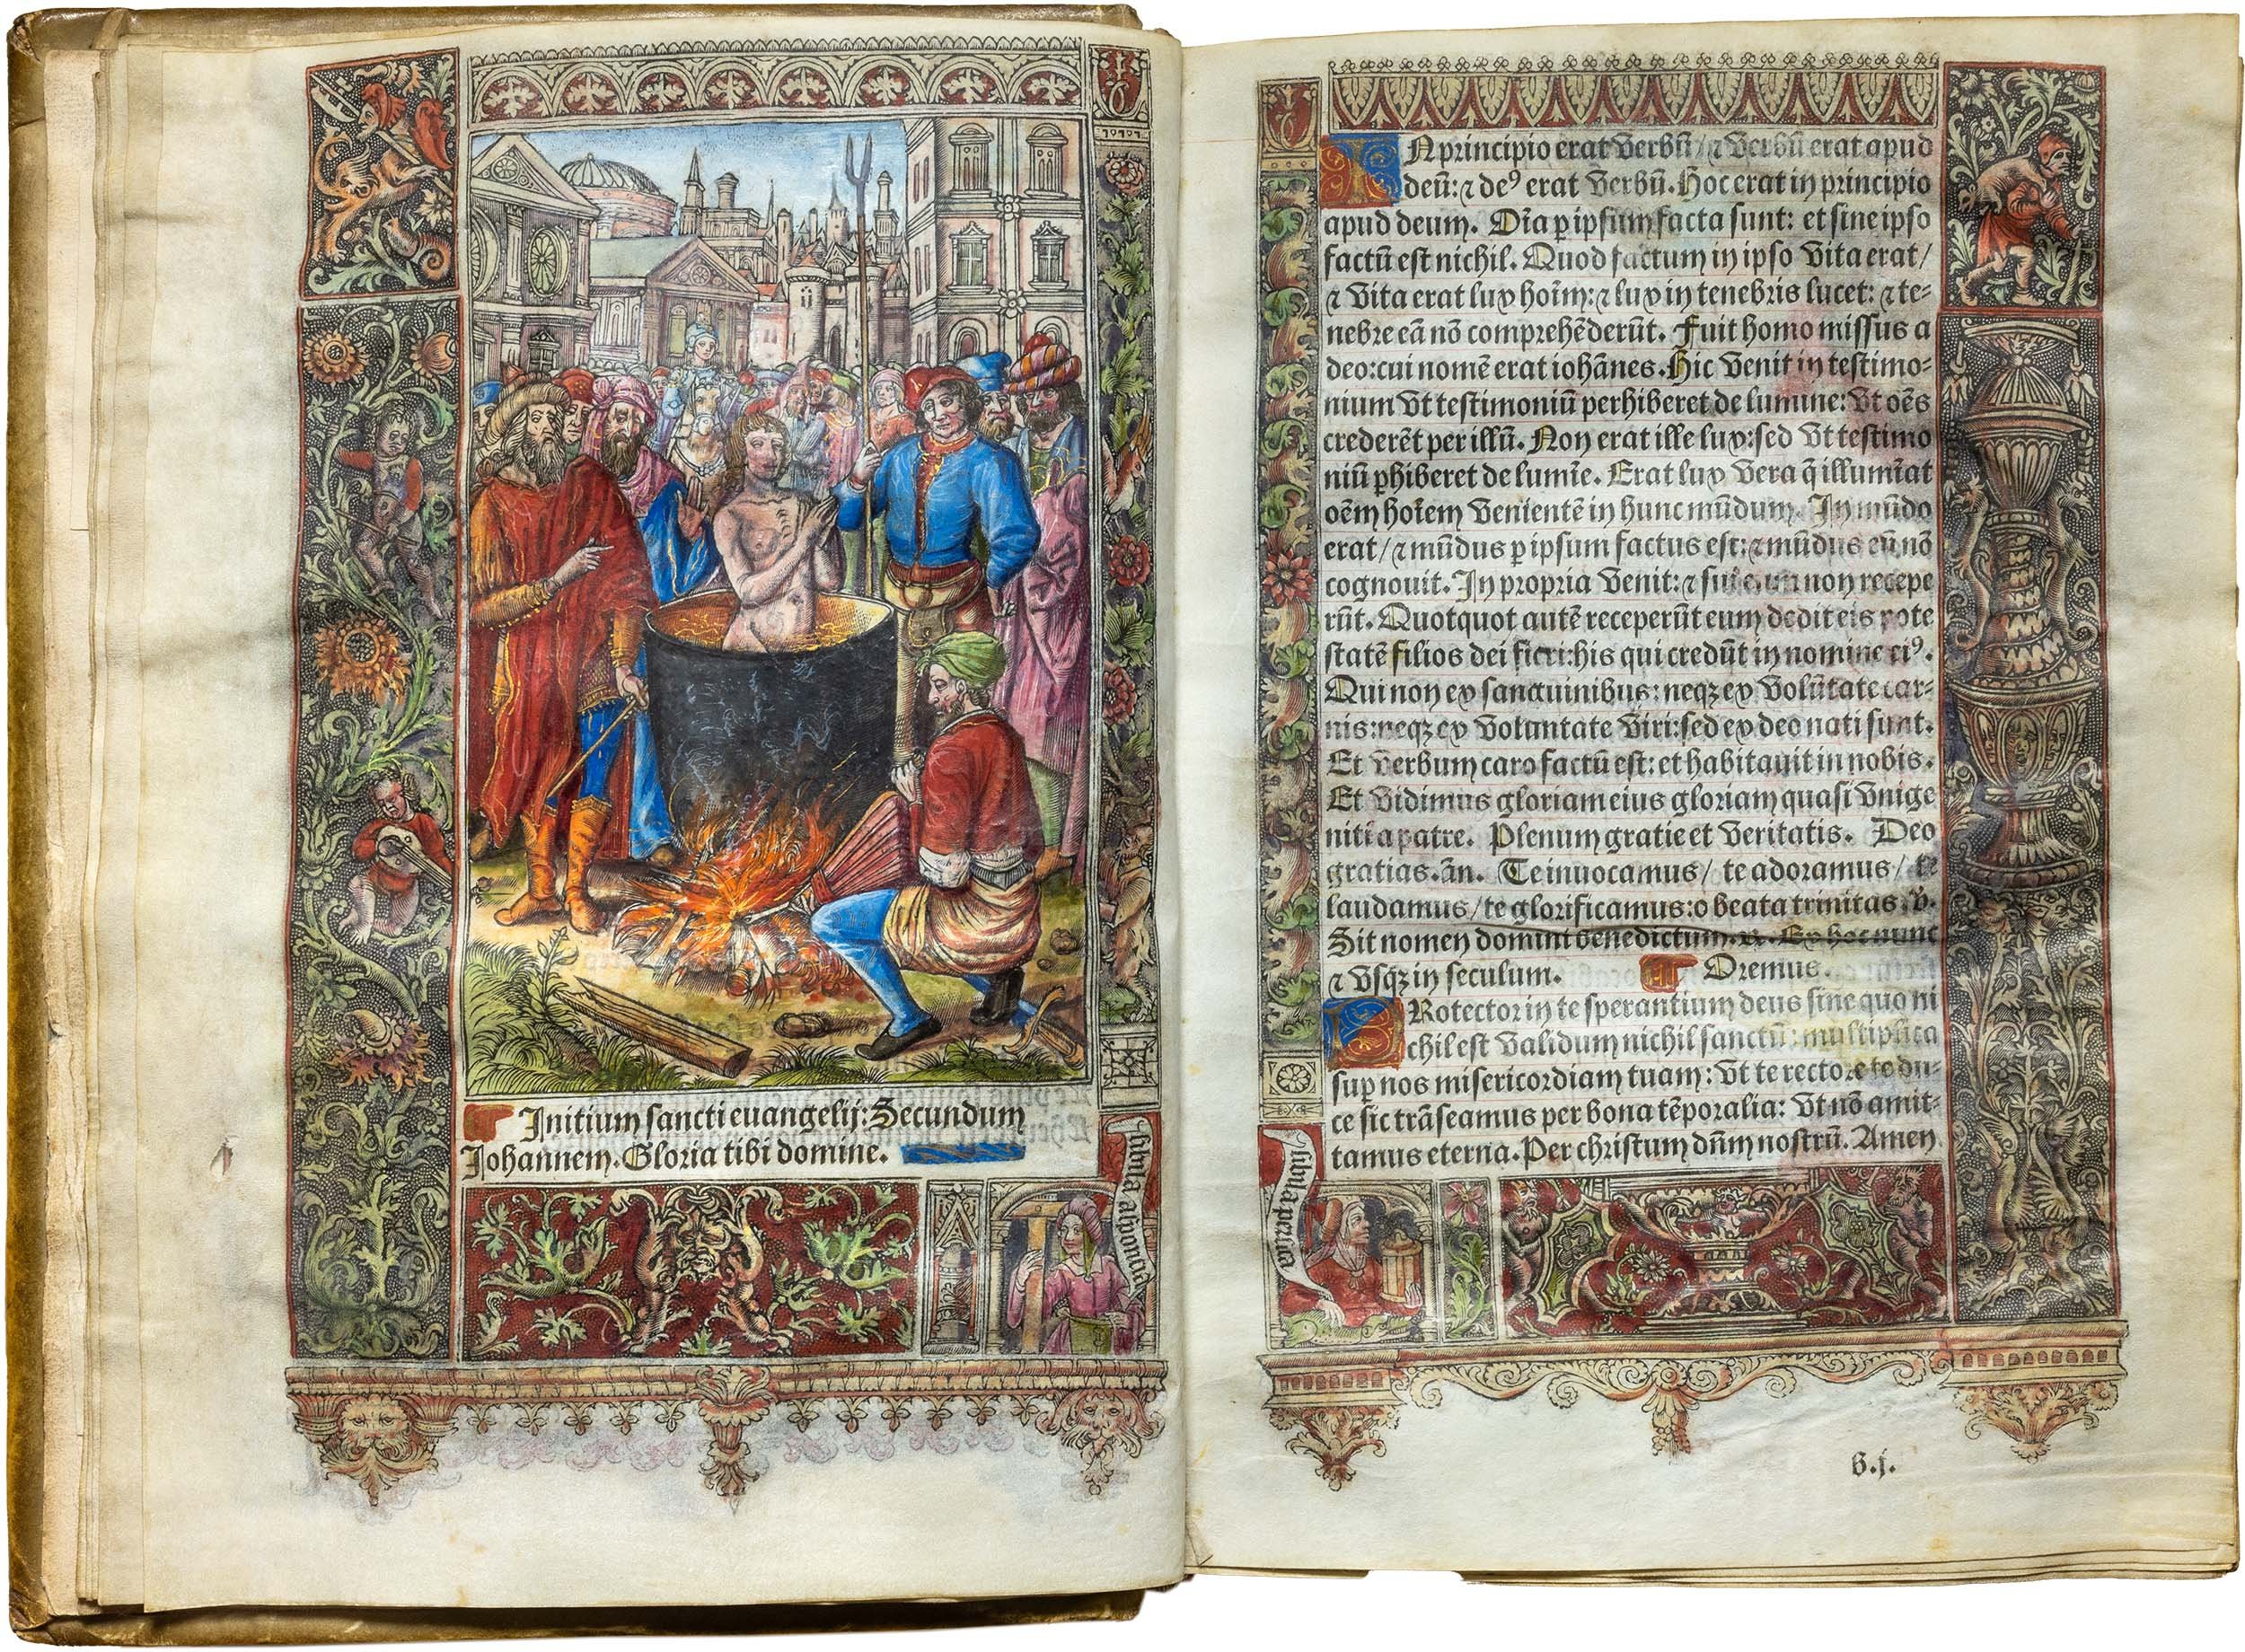 Horae-bmv-31-march-1511-kerver-printed-book-of-hours-illuminated-copy-vellum-12.jpg